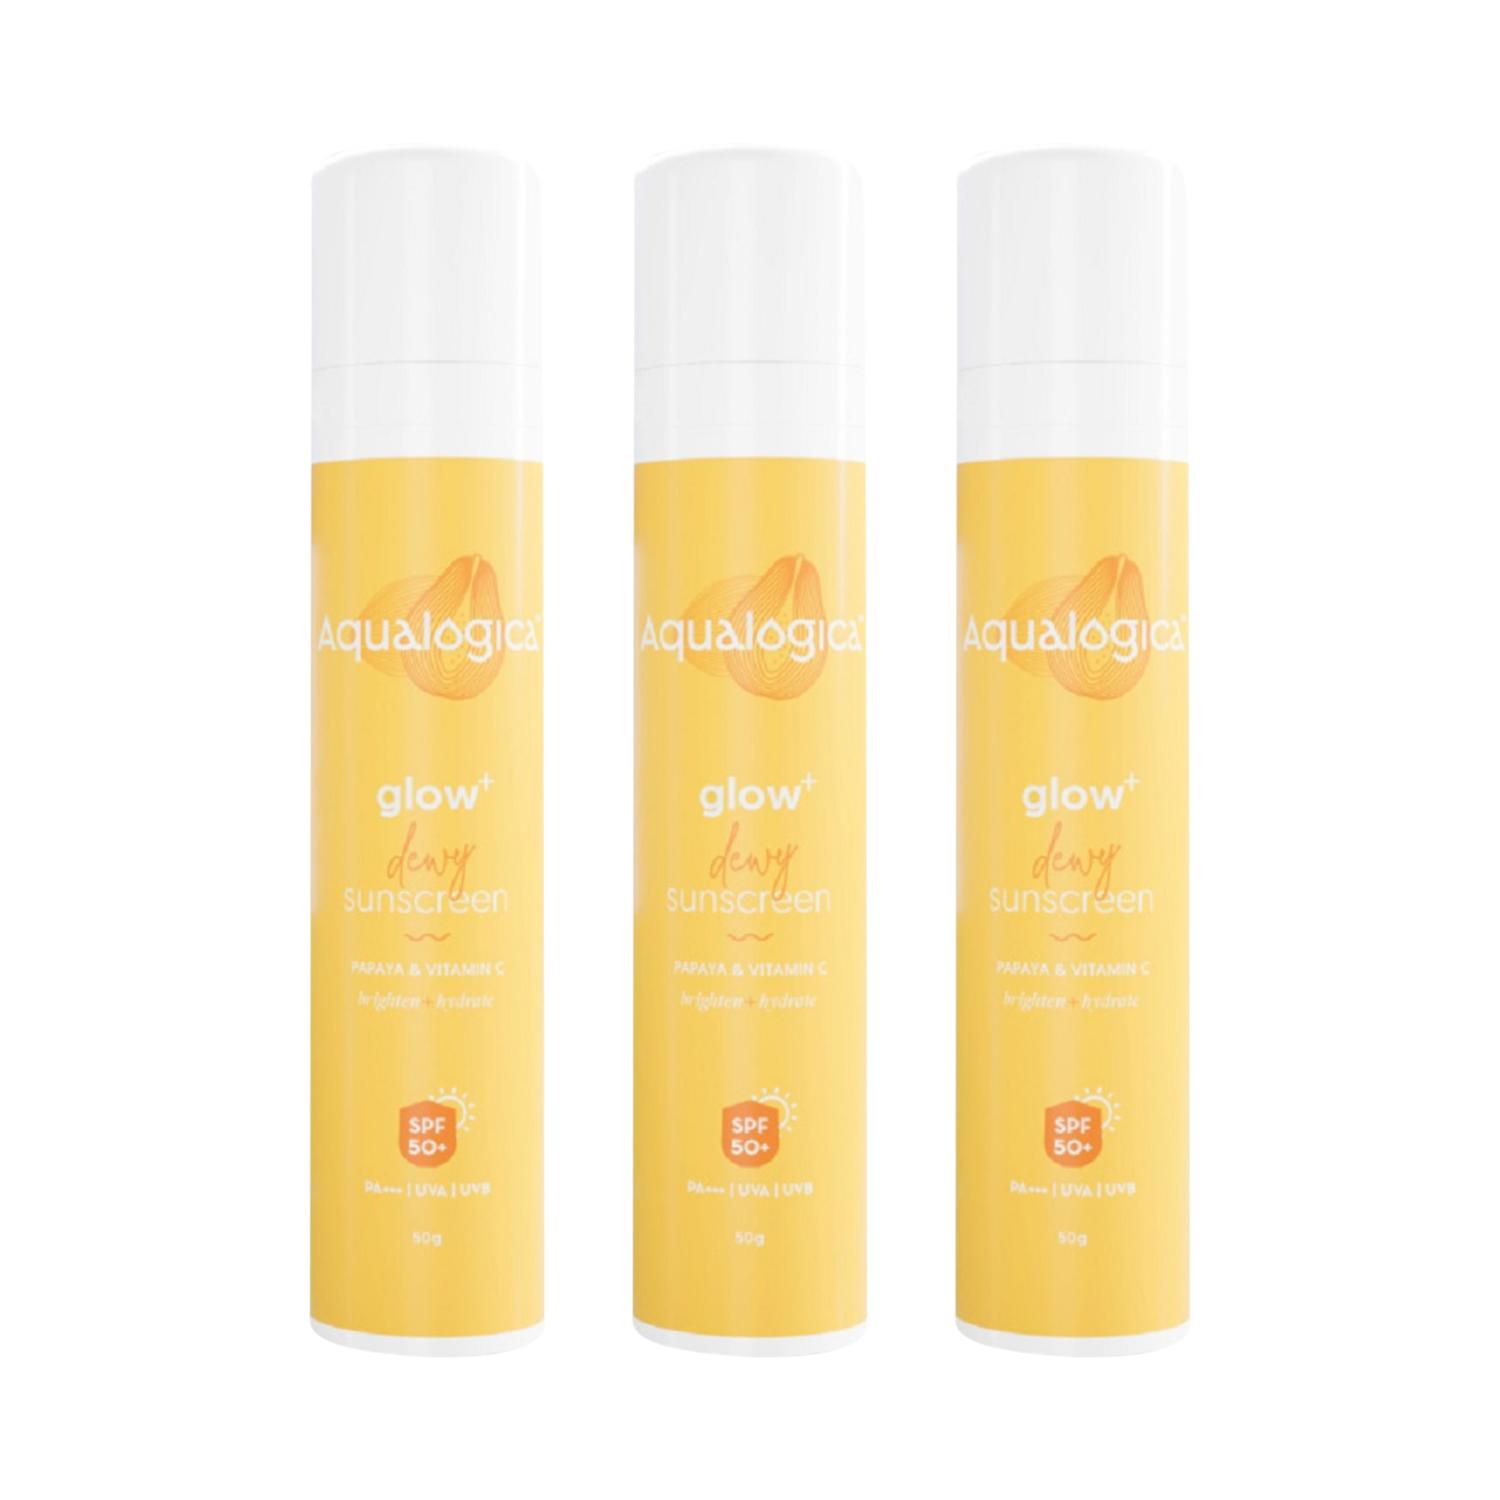 Aqualogica | Aqualogica Glow+ Dewy Sunscreen - (50g) (Pack of 3) Combo